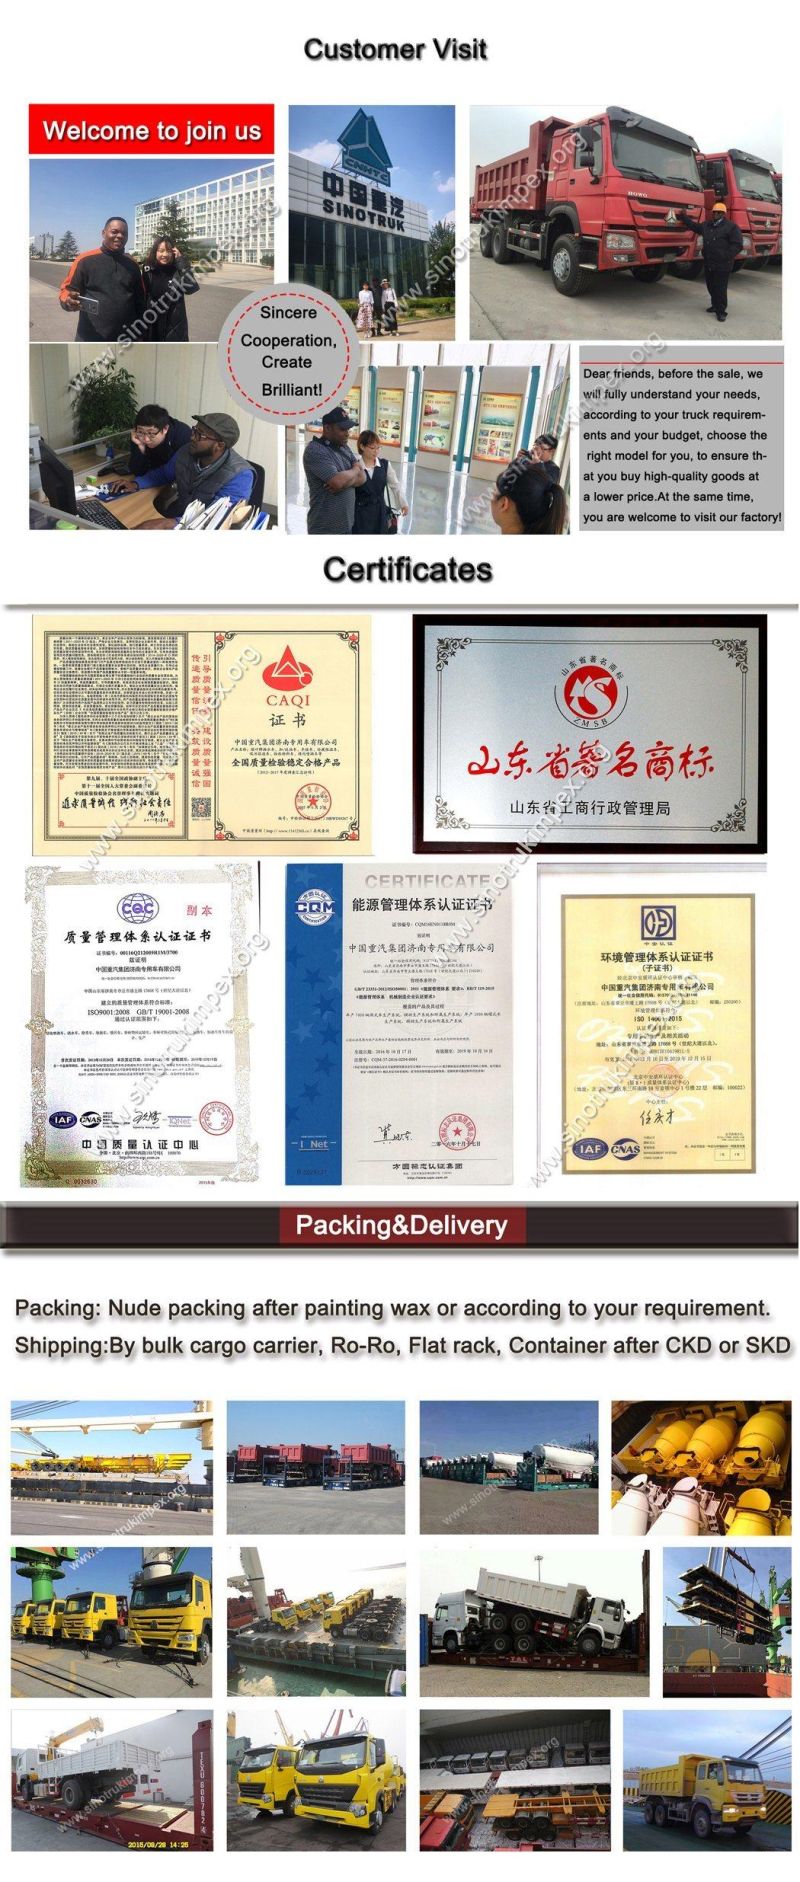 Dongfeng 10 Ton 4*2 Road Construction Asphalt Sprayer Heating Asphalt Distributor